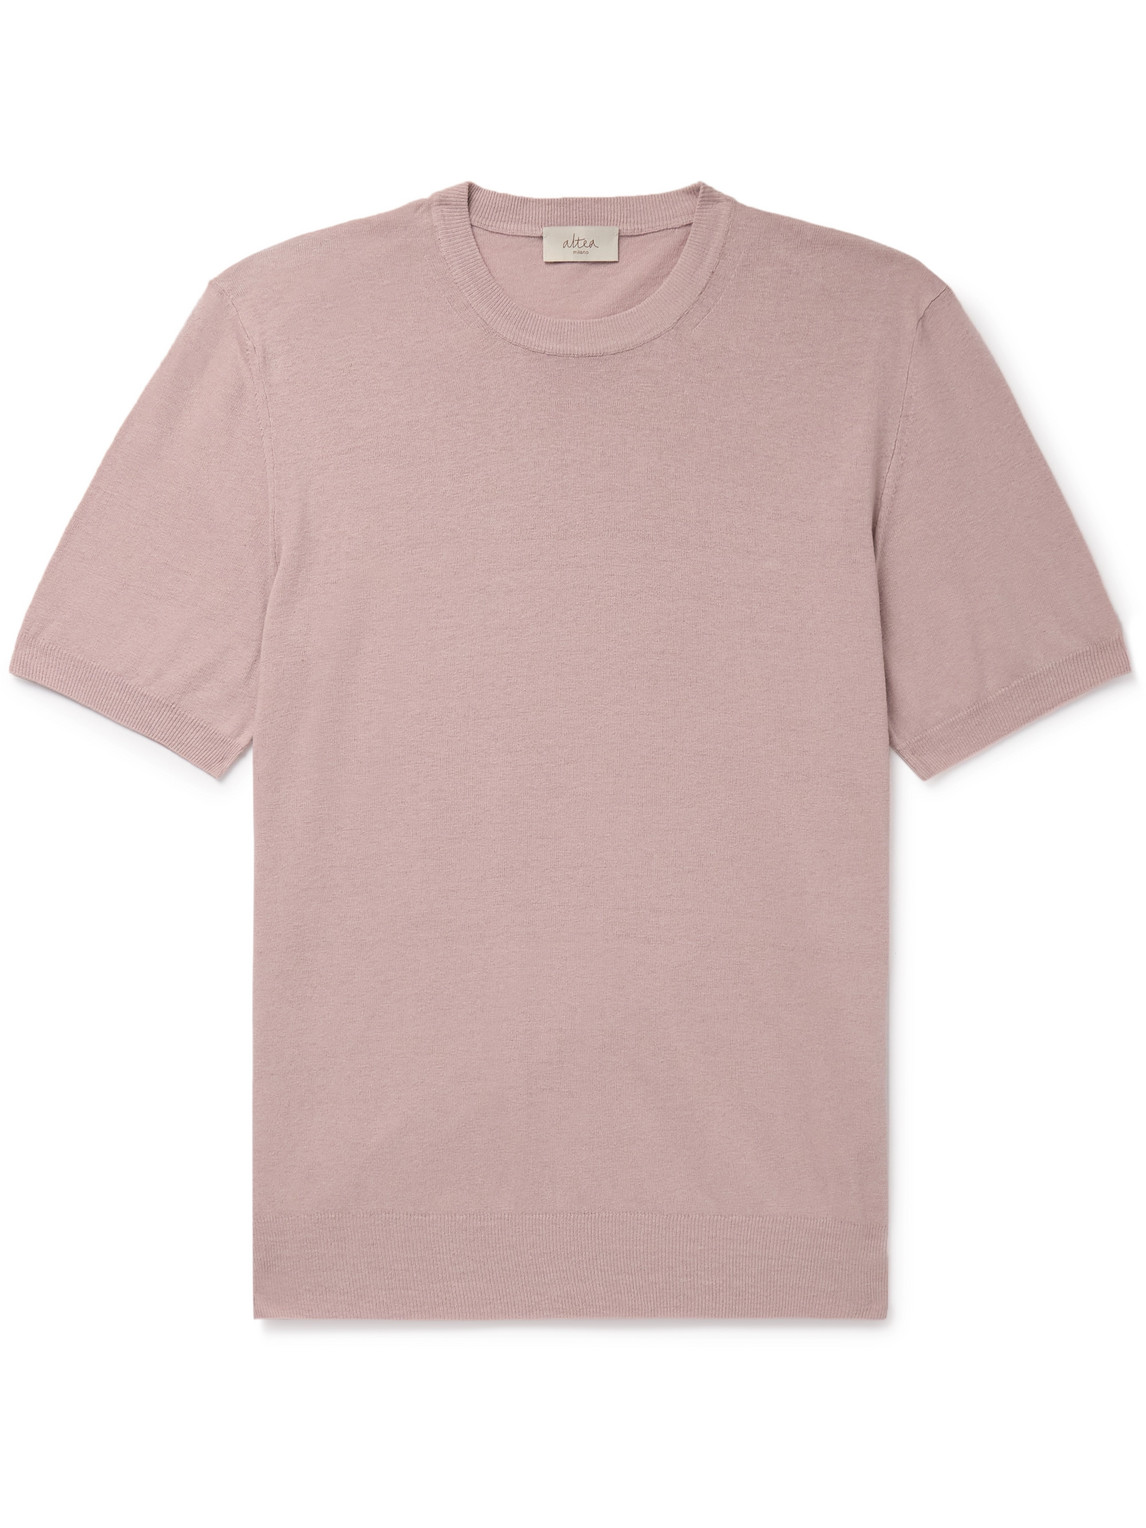 Altea - Linen and Cotton-Blend T-Shirt - Men - Pink - M von Altea